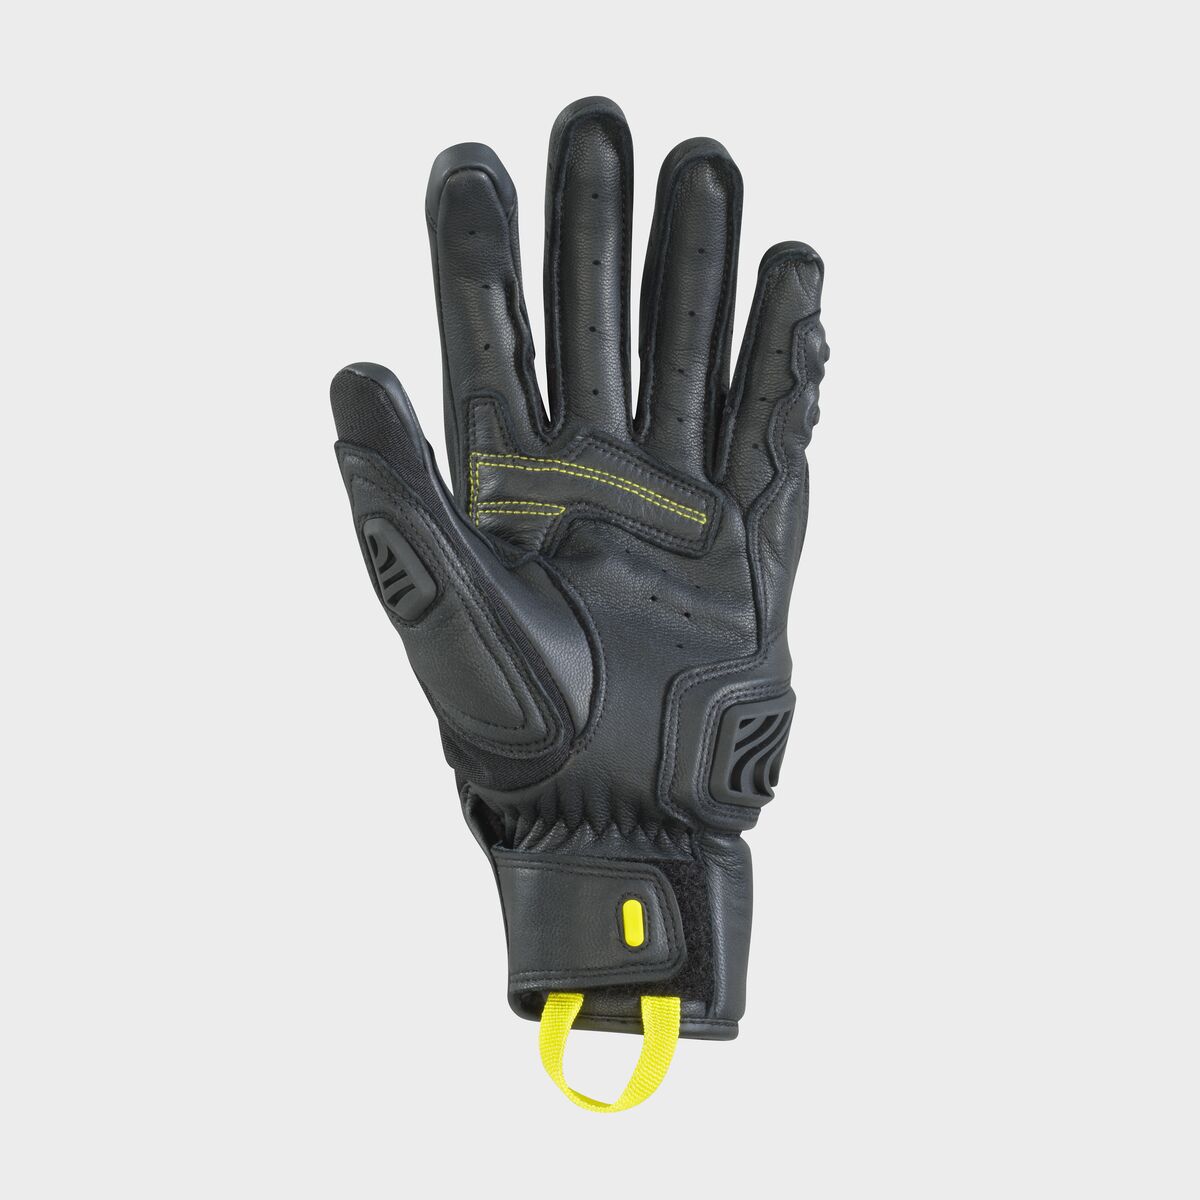 Husqvarna Scalar Gloves